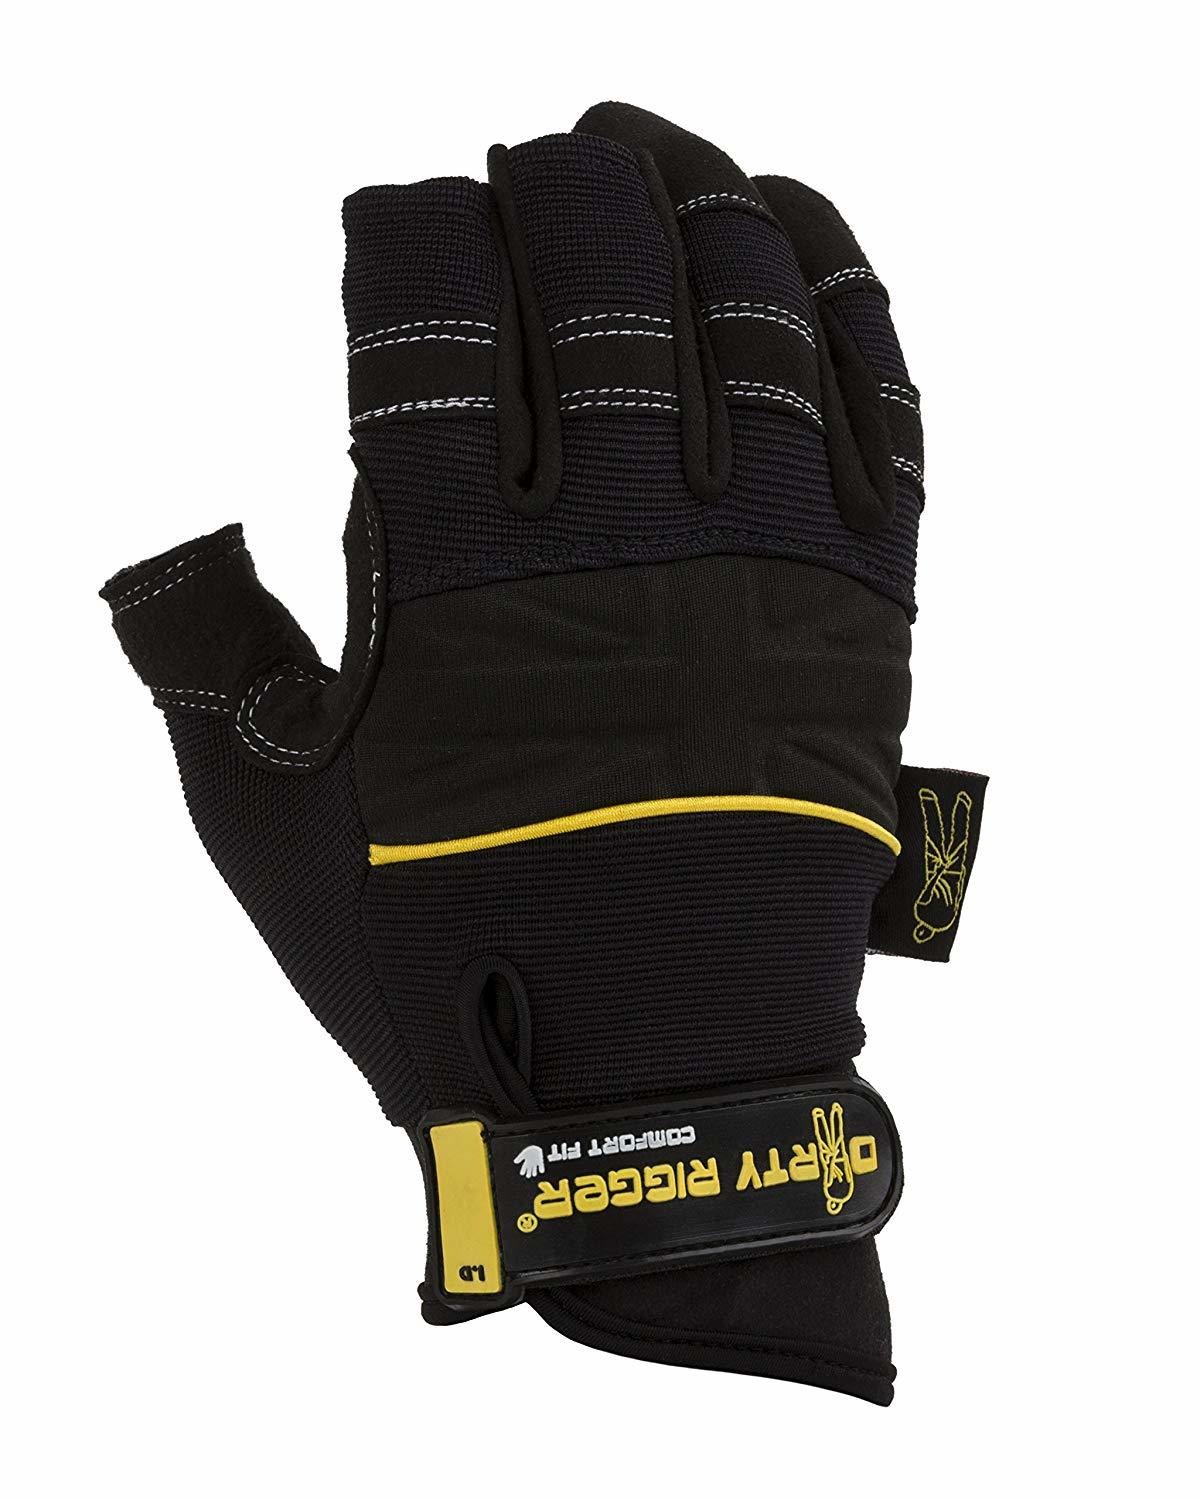 Dirty Rigger Kevlar Protector Work Glove L Black